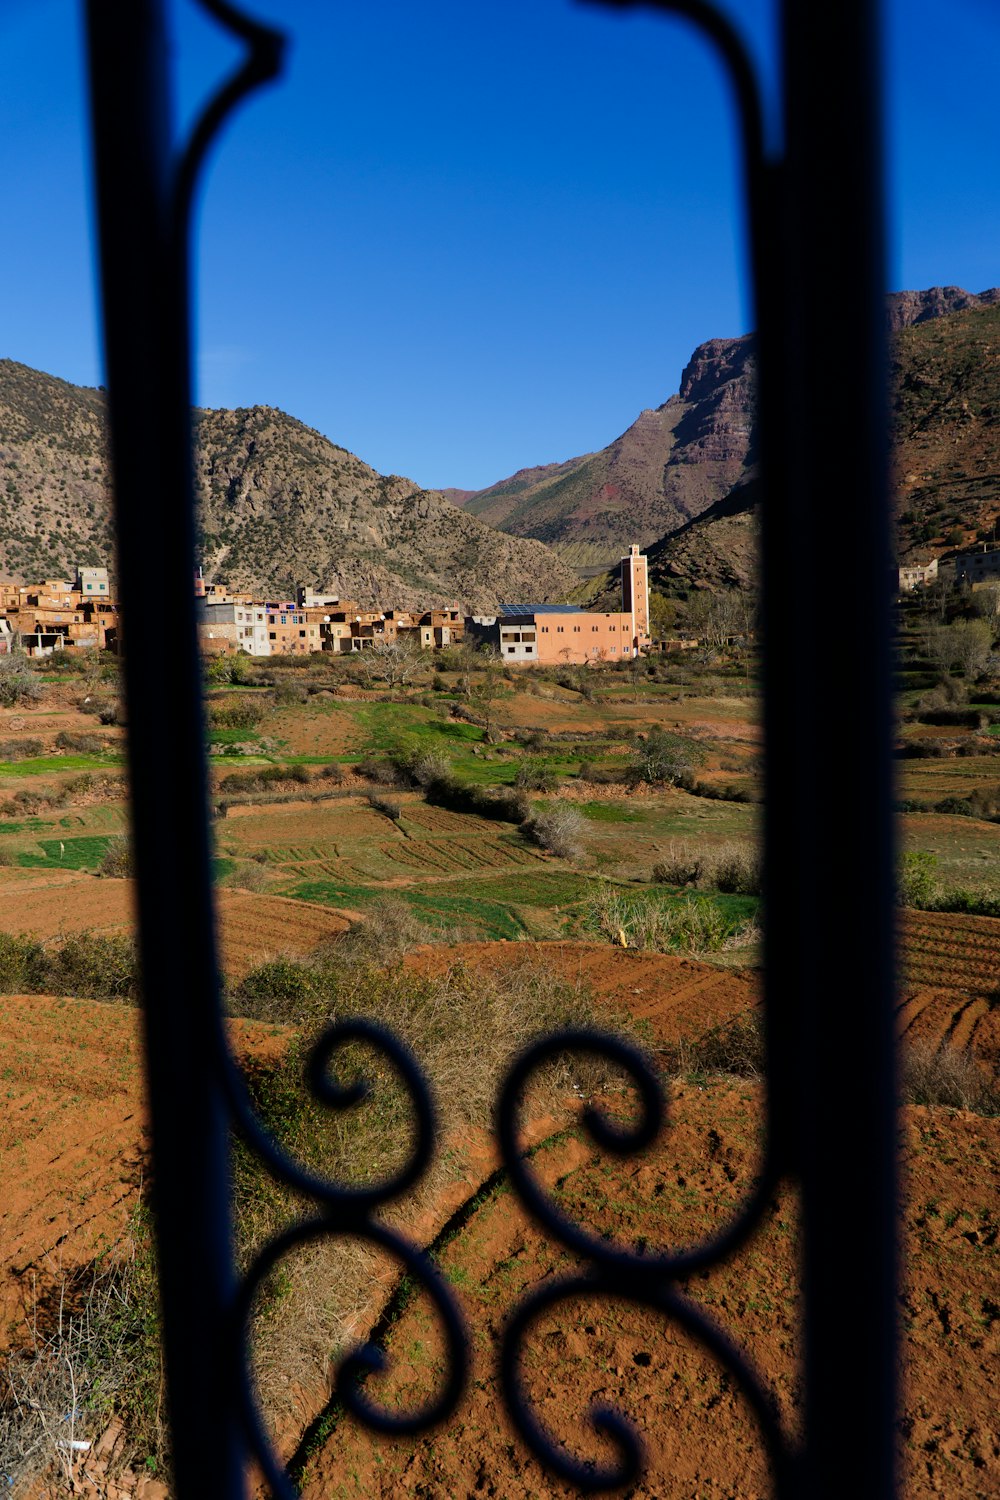 a view of a village through a window